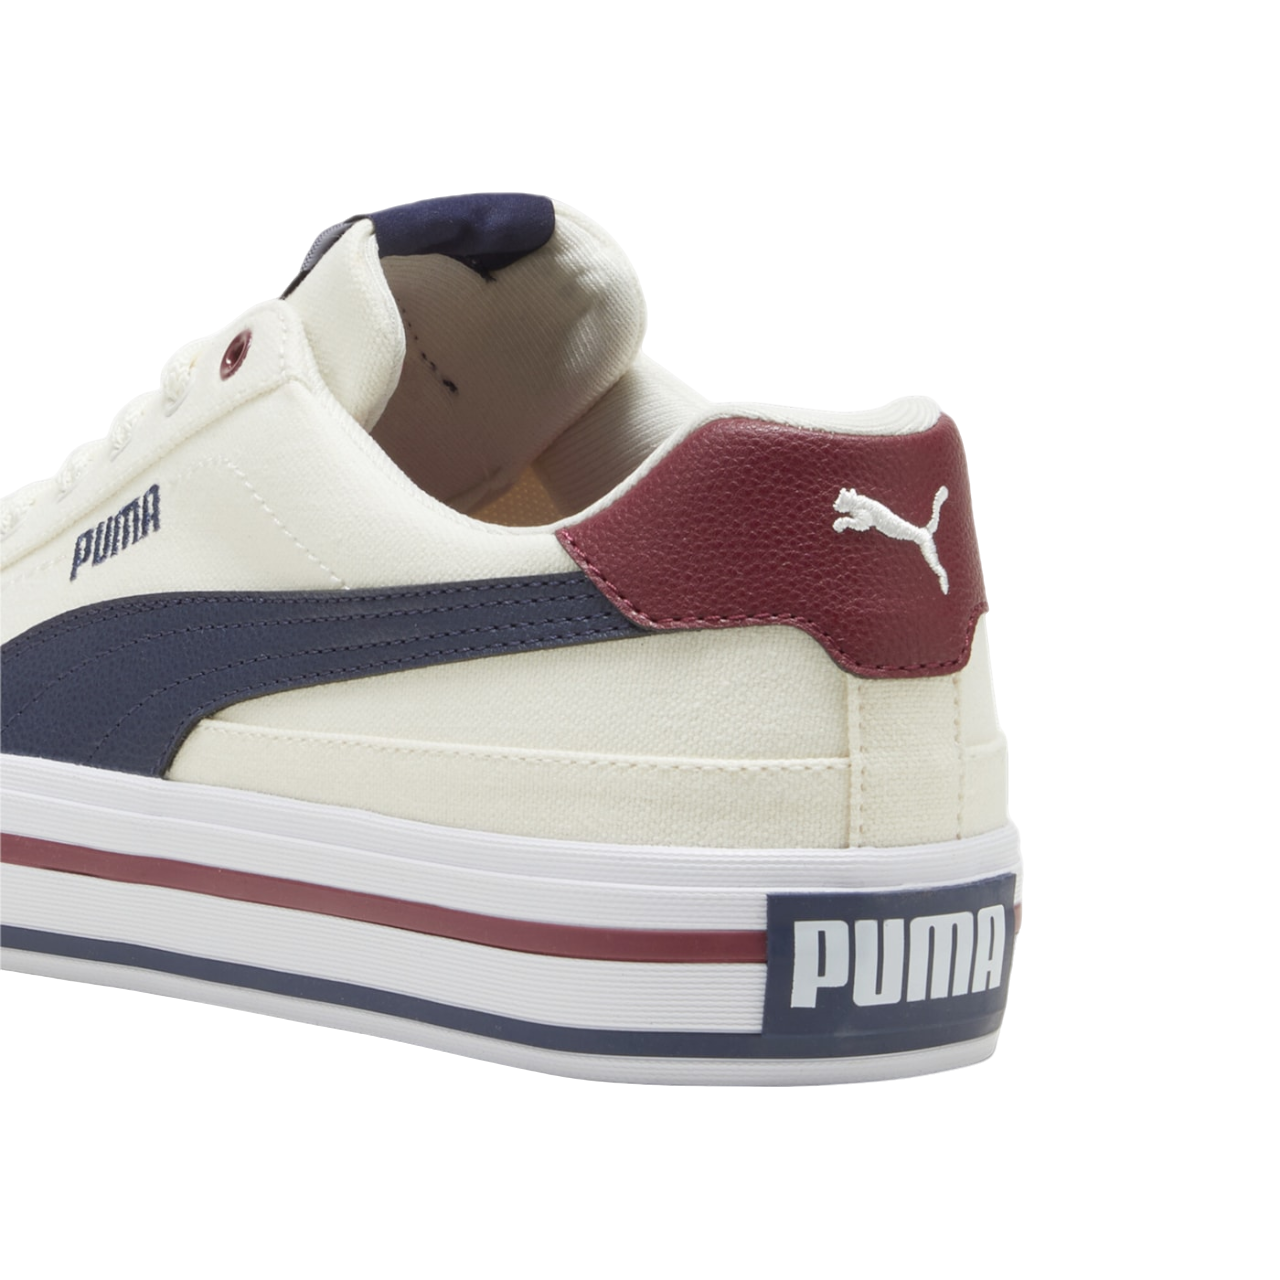 Puma Court Classic Vulc FS 396353-01 white-blue adult sneakers shoe